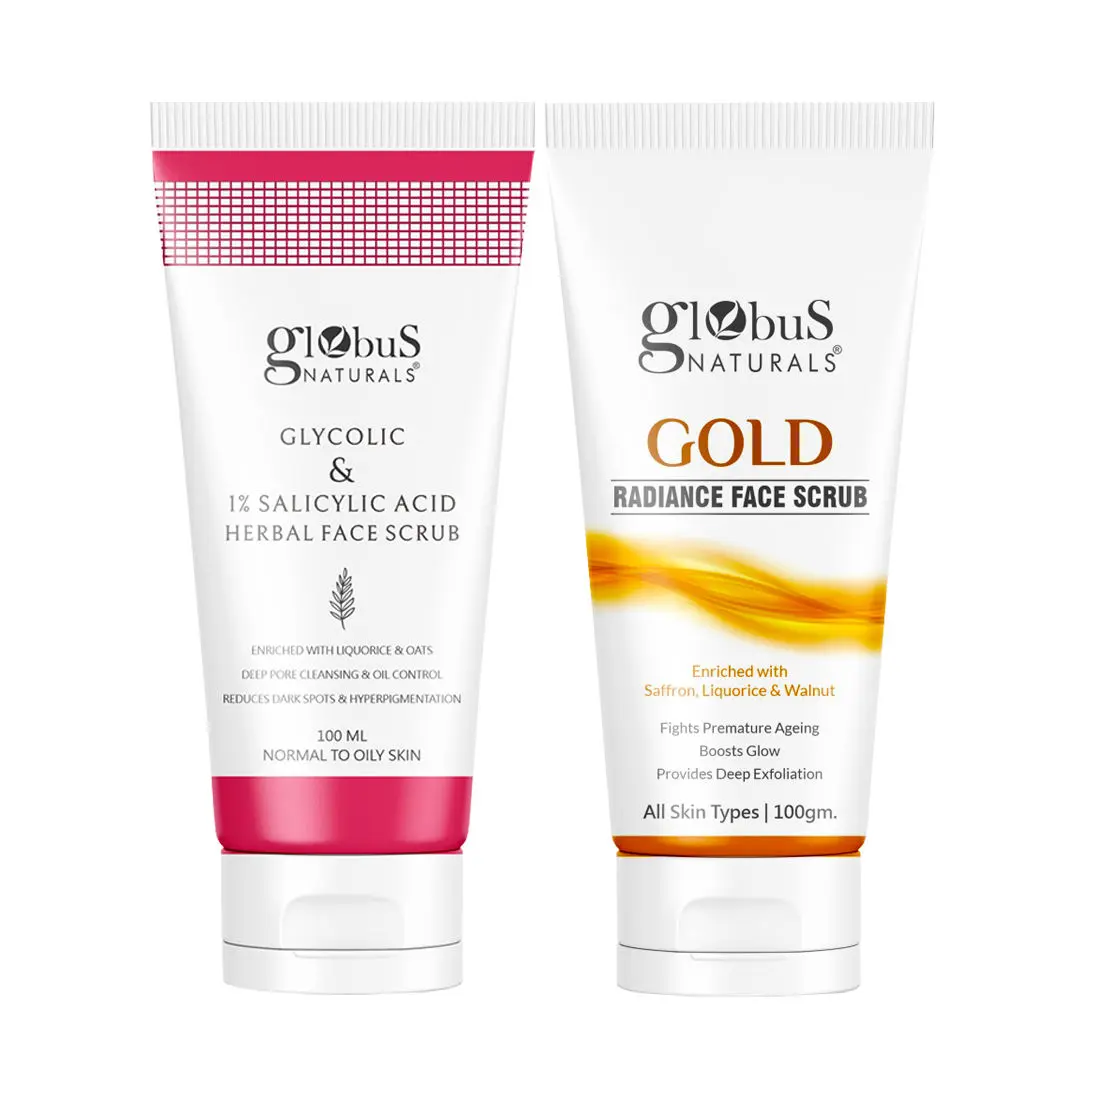 Globus Naturals Glycolic & 1% Salicylic Acid Anti-Acne & Gold Radiance Brightening Face Scrub Combo - Set of 2